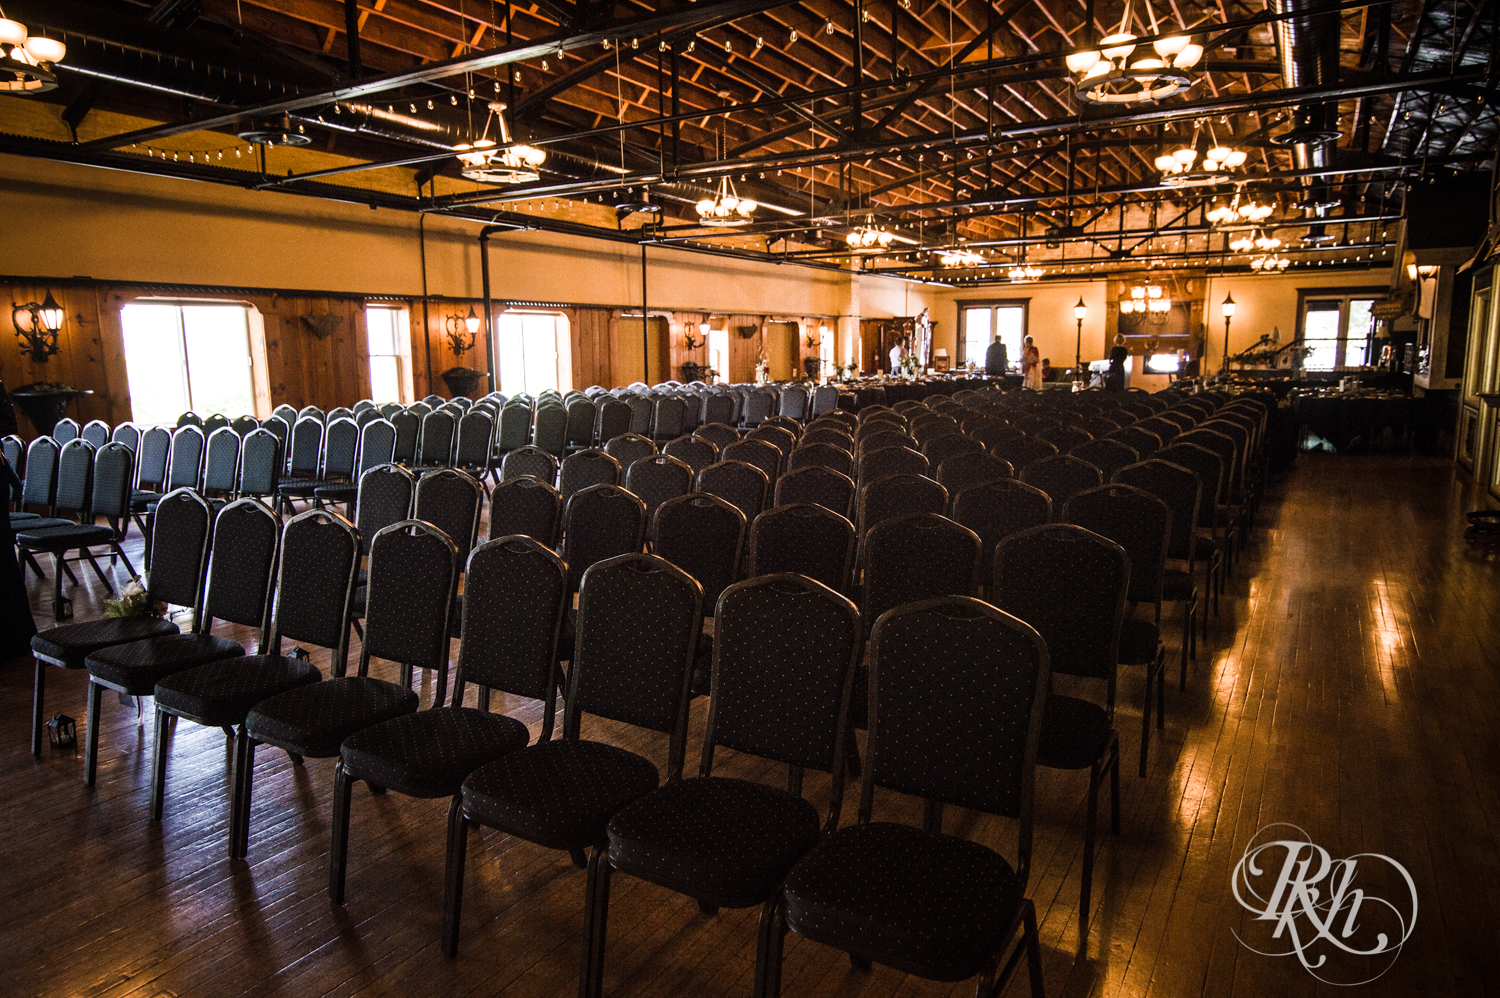 Indoor wedding ceremony setup at Kellerman's Event Center in White Bear Lake, Minnesota.